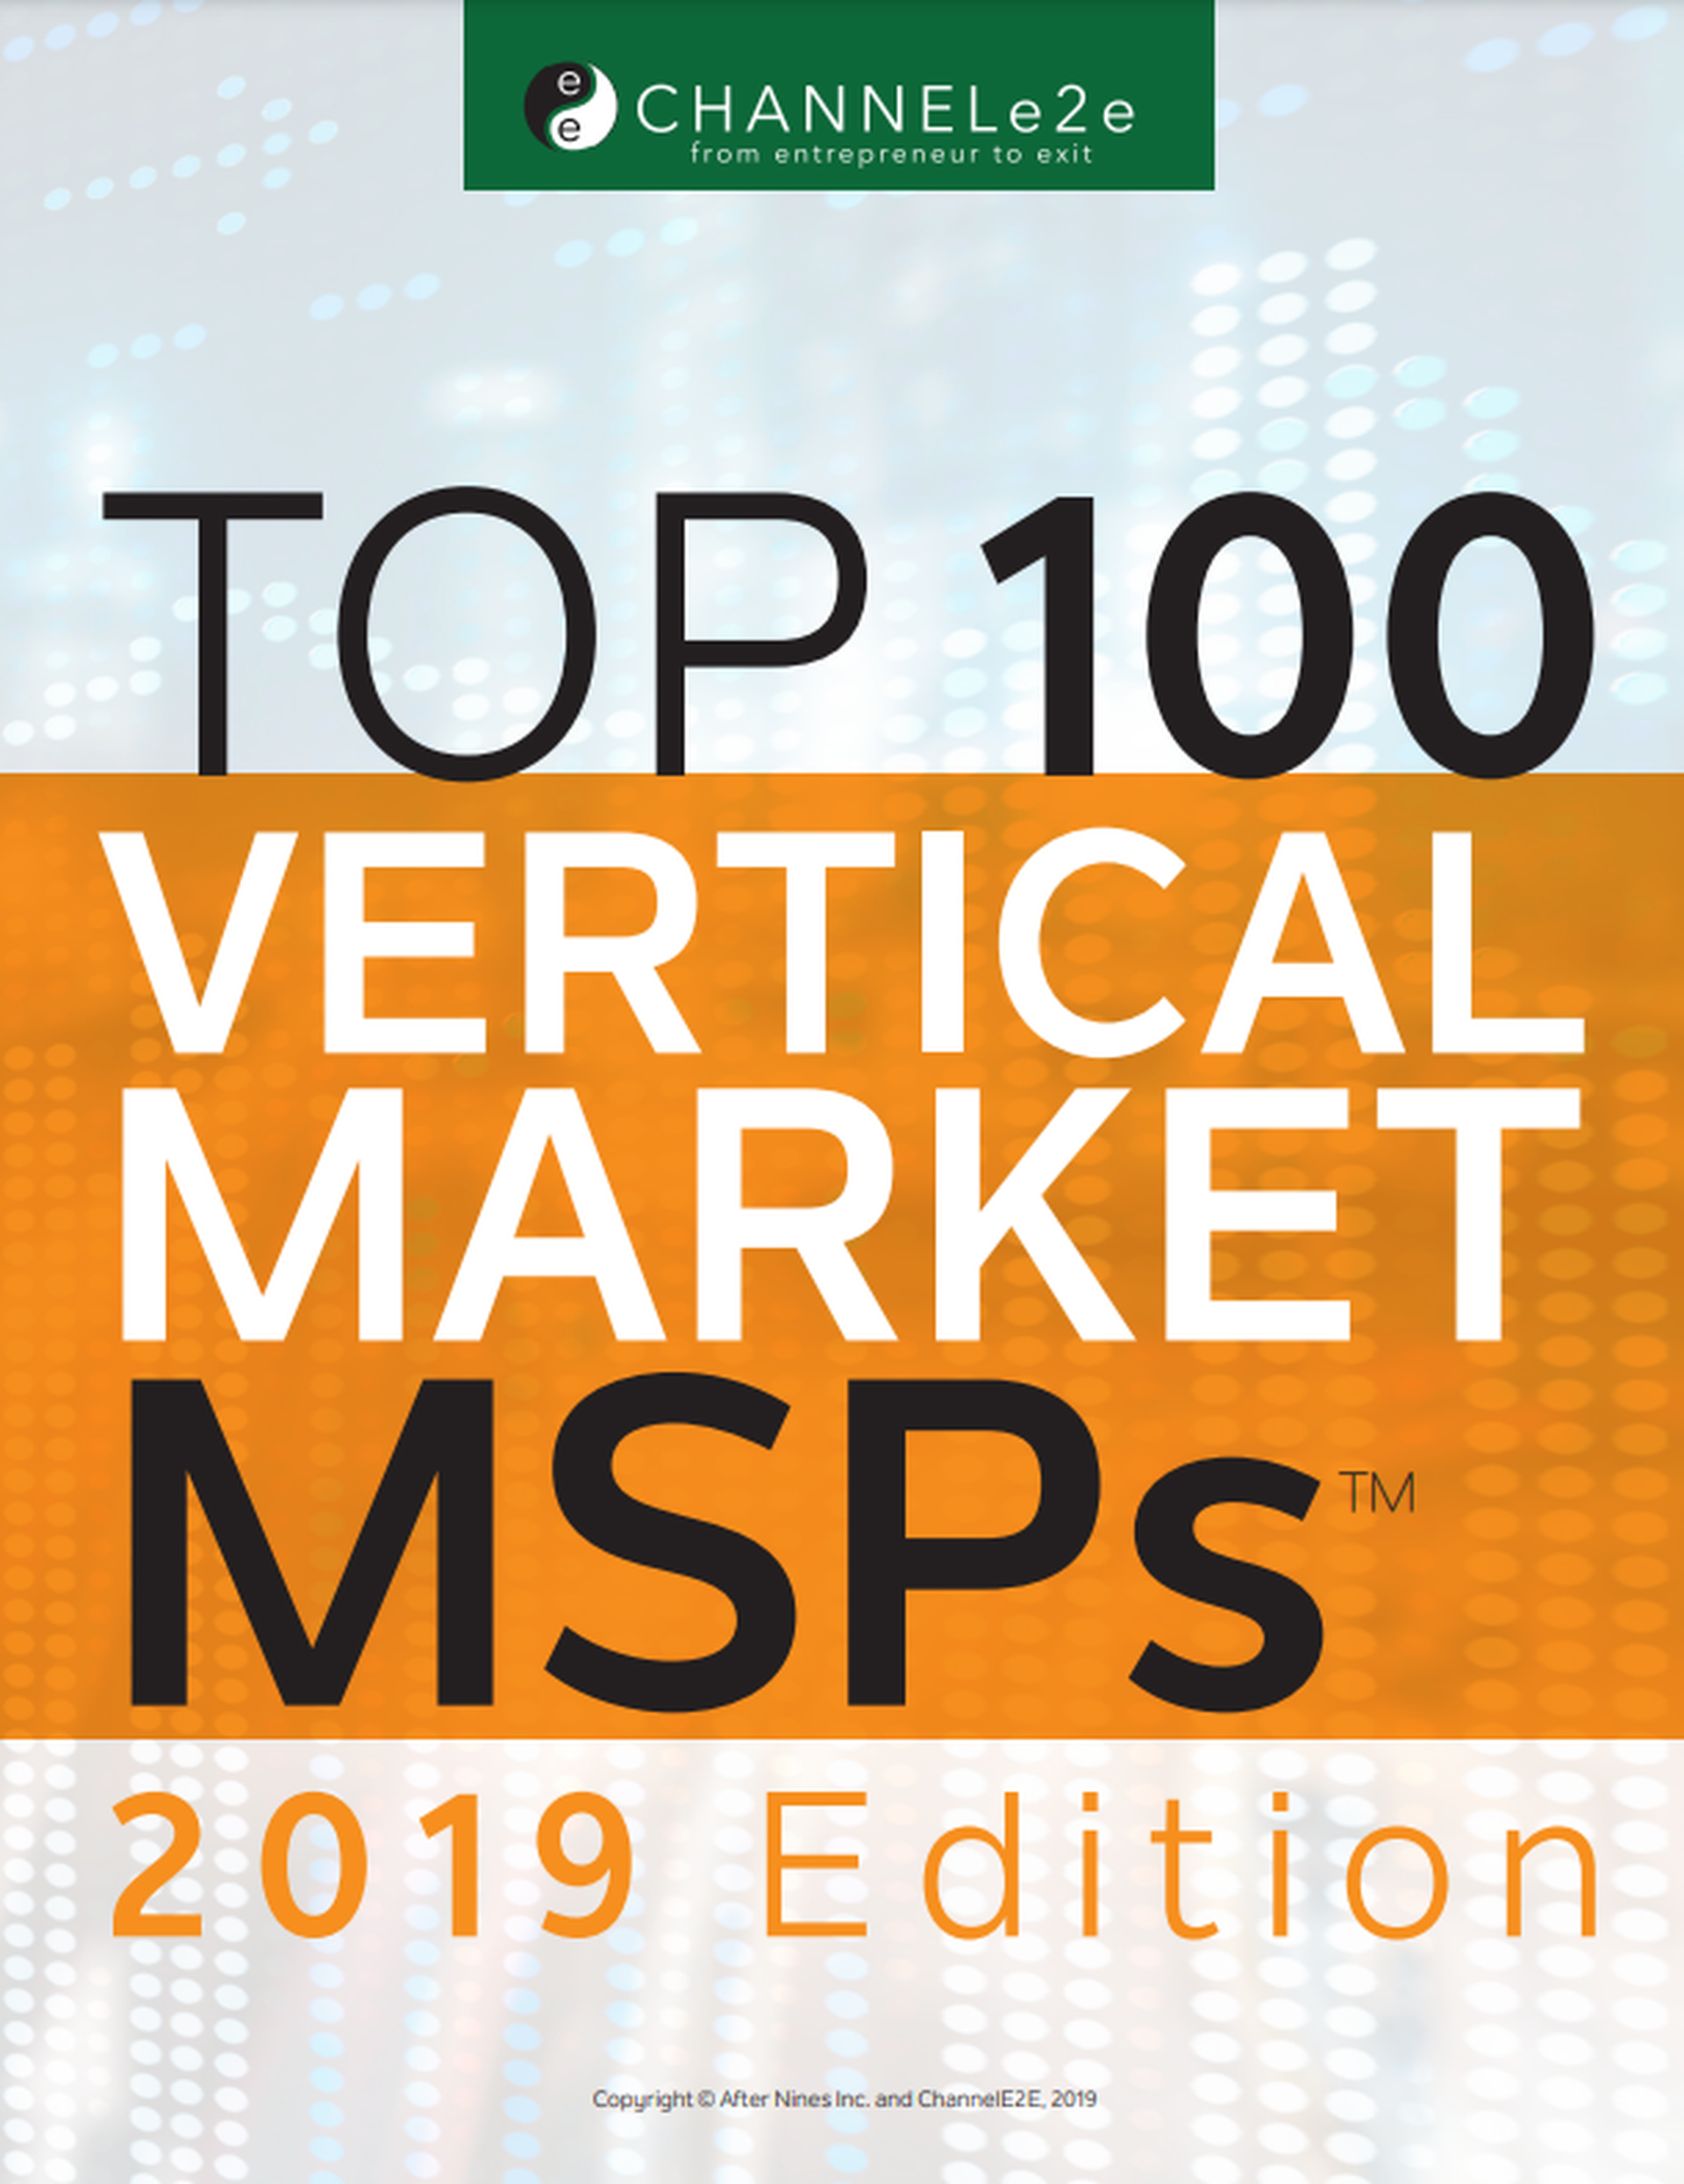 Top 100 Vertical Market MSPs 2019 Edition